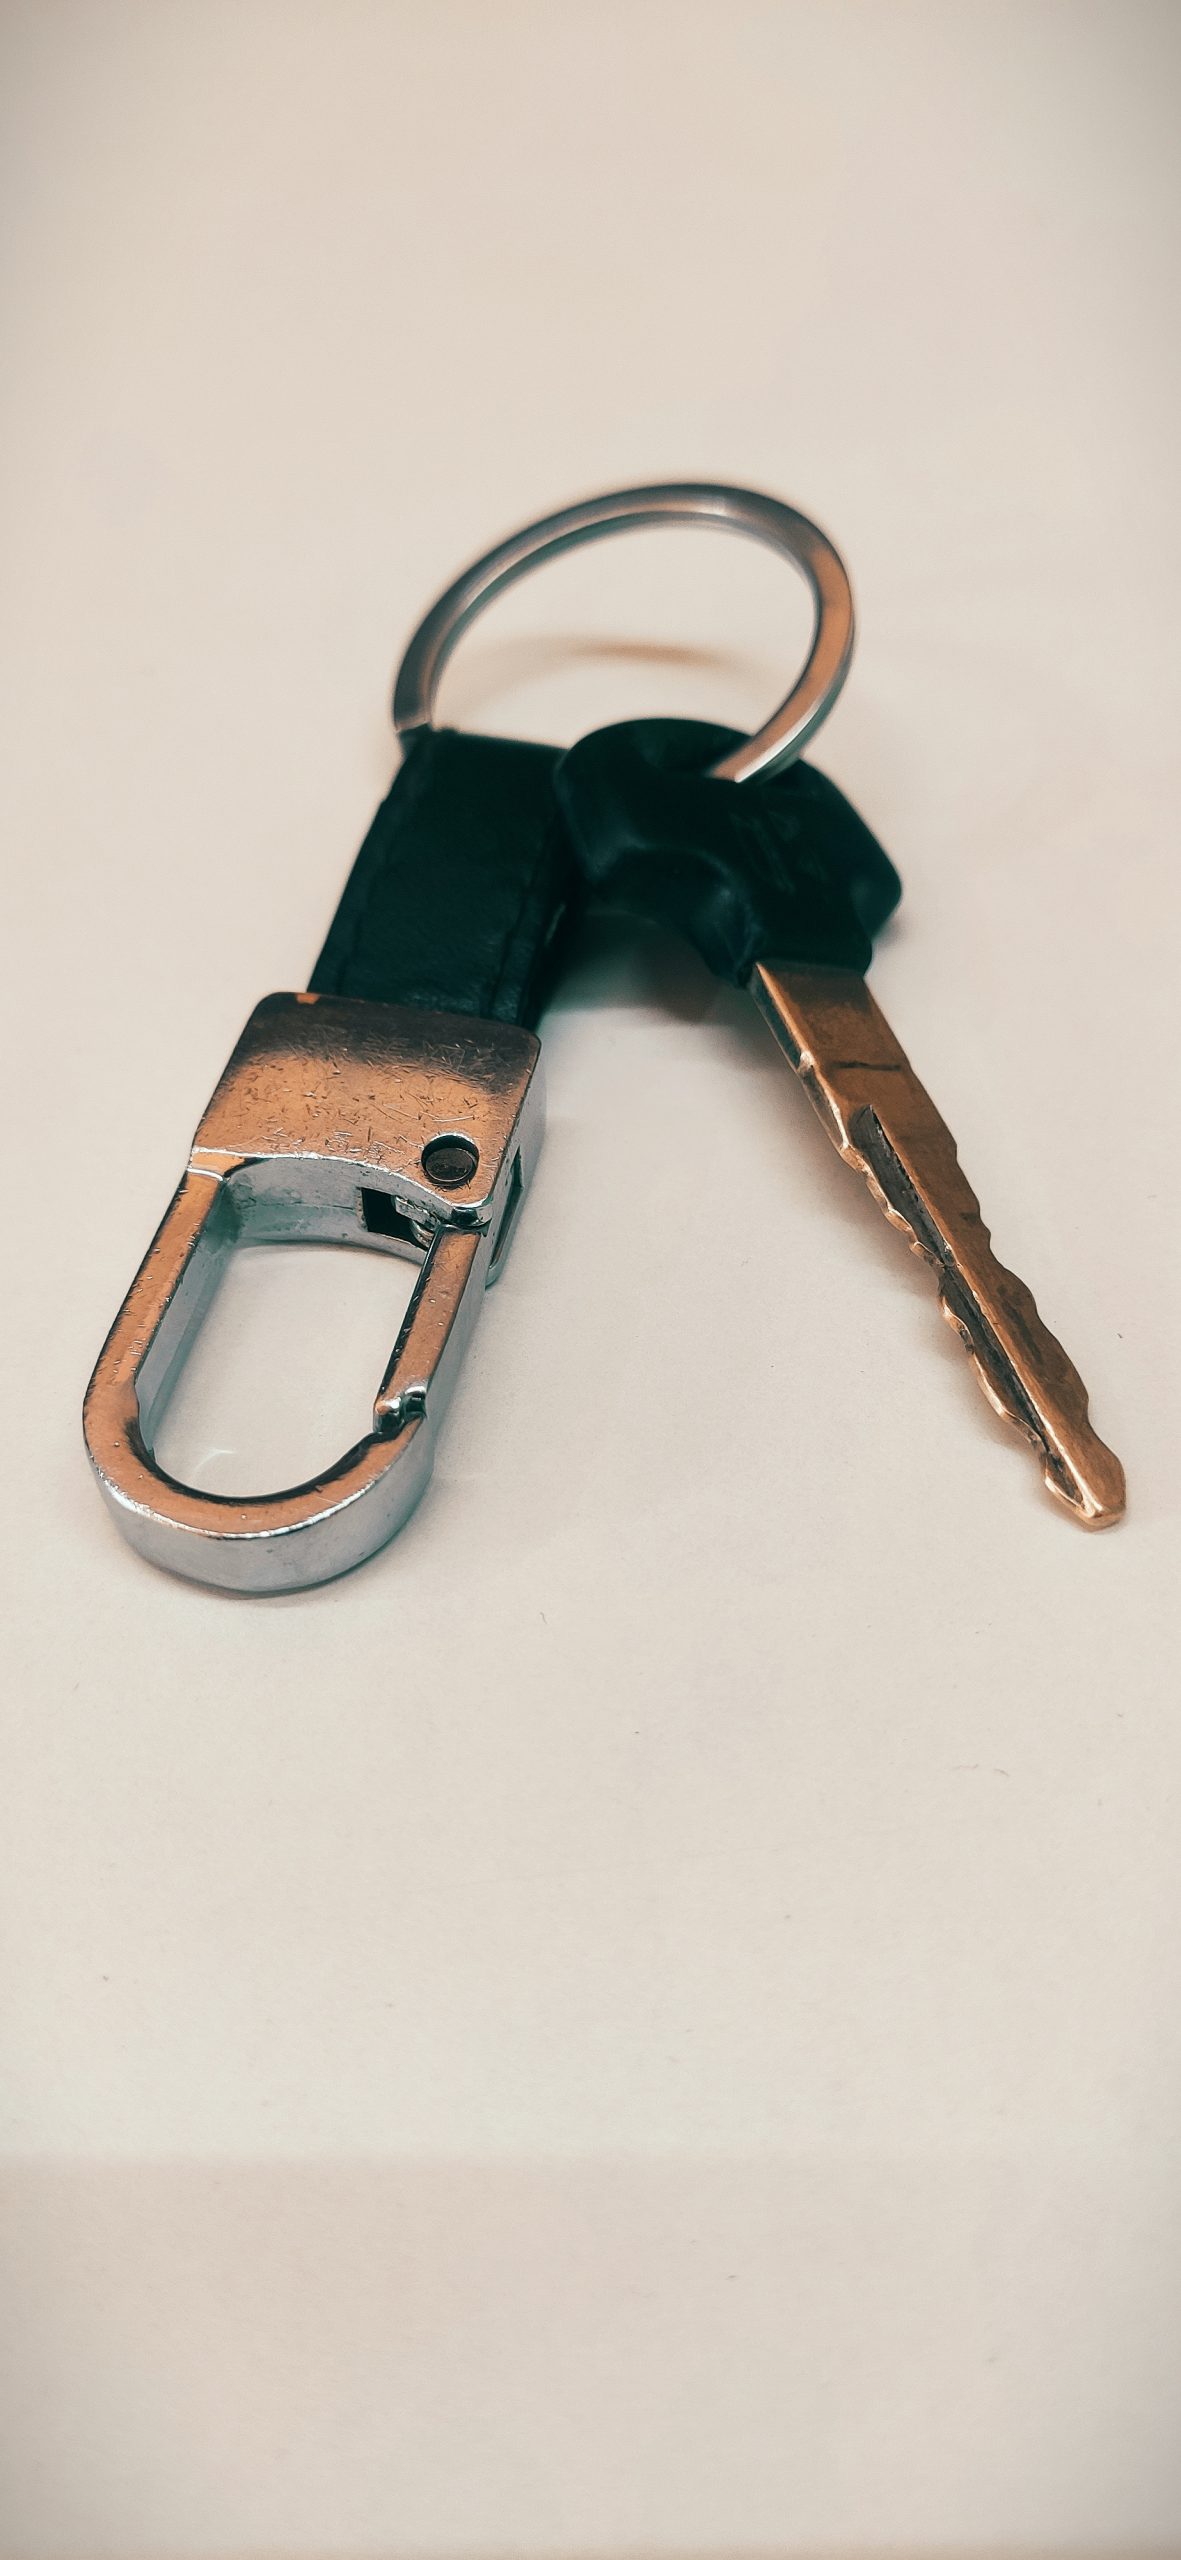 Key of a vehicle lock